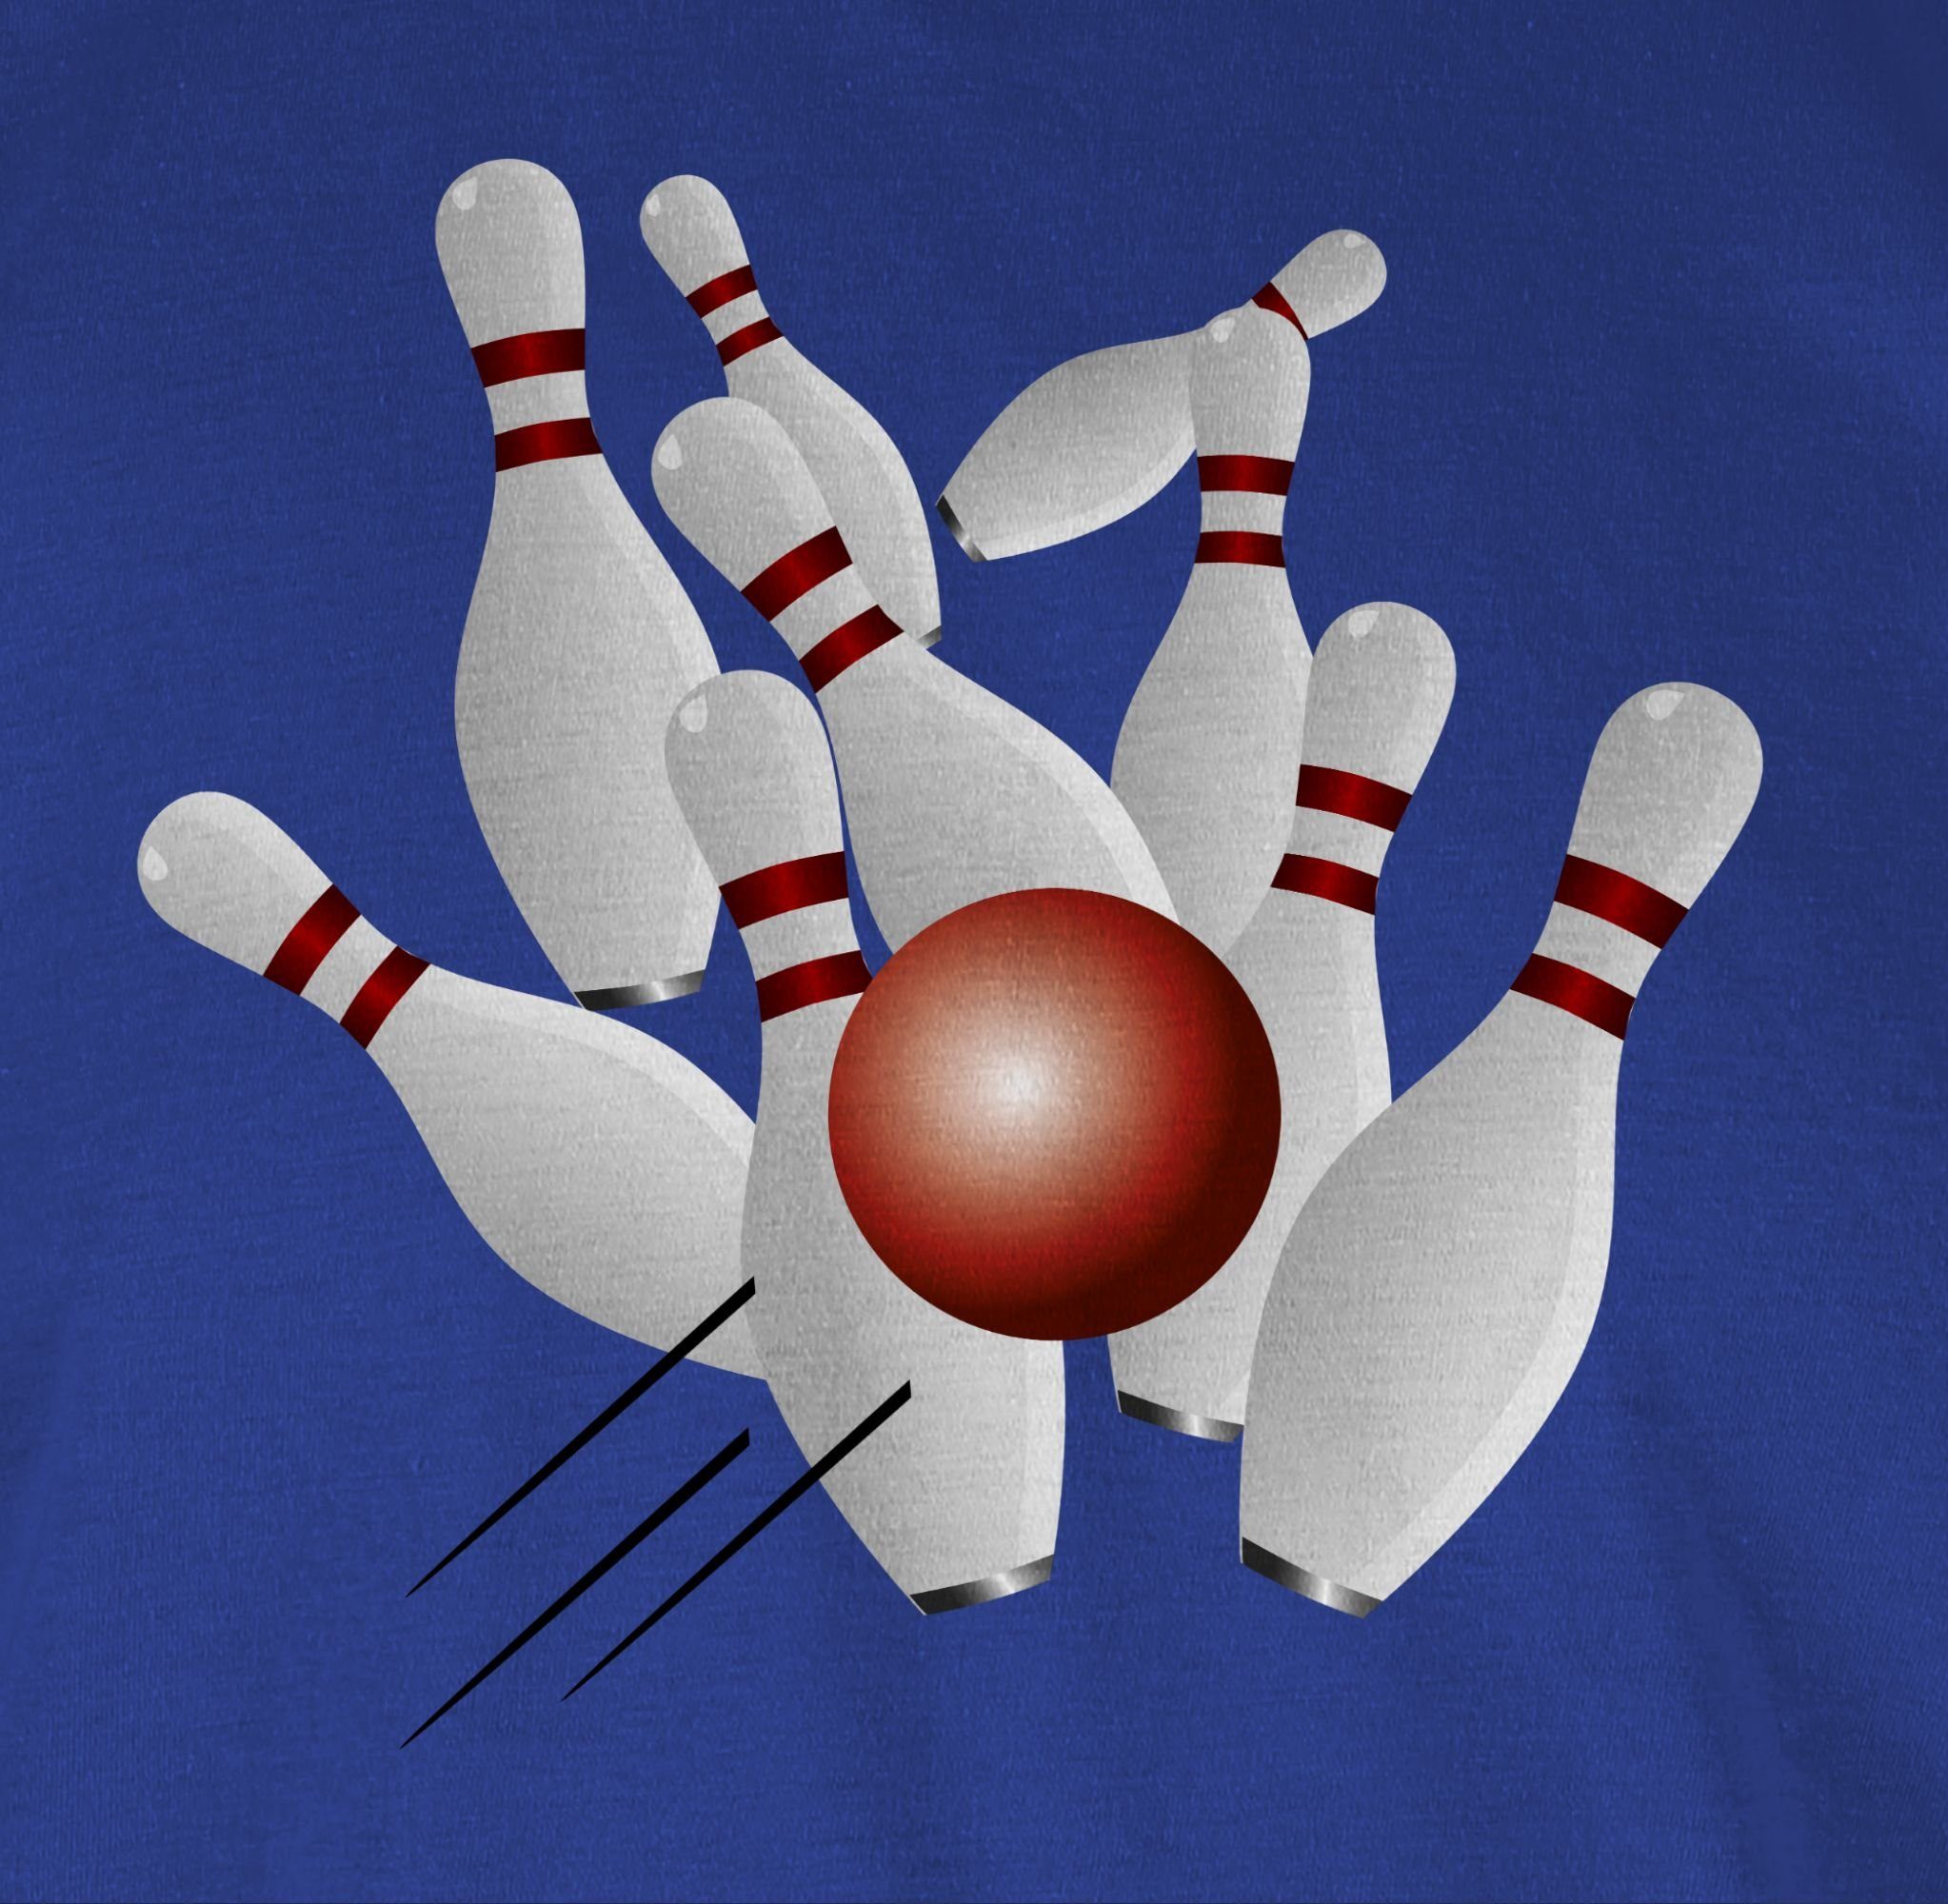 Shirtracer T-Shirt Kugel & Bowling Kegeln alle 1 Kegeln 9 Royalblau Kegeln